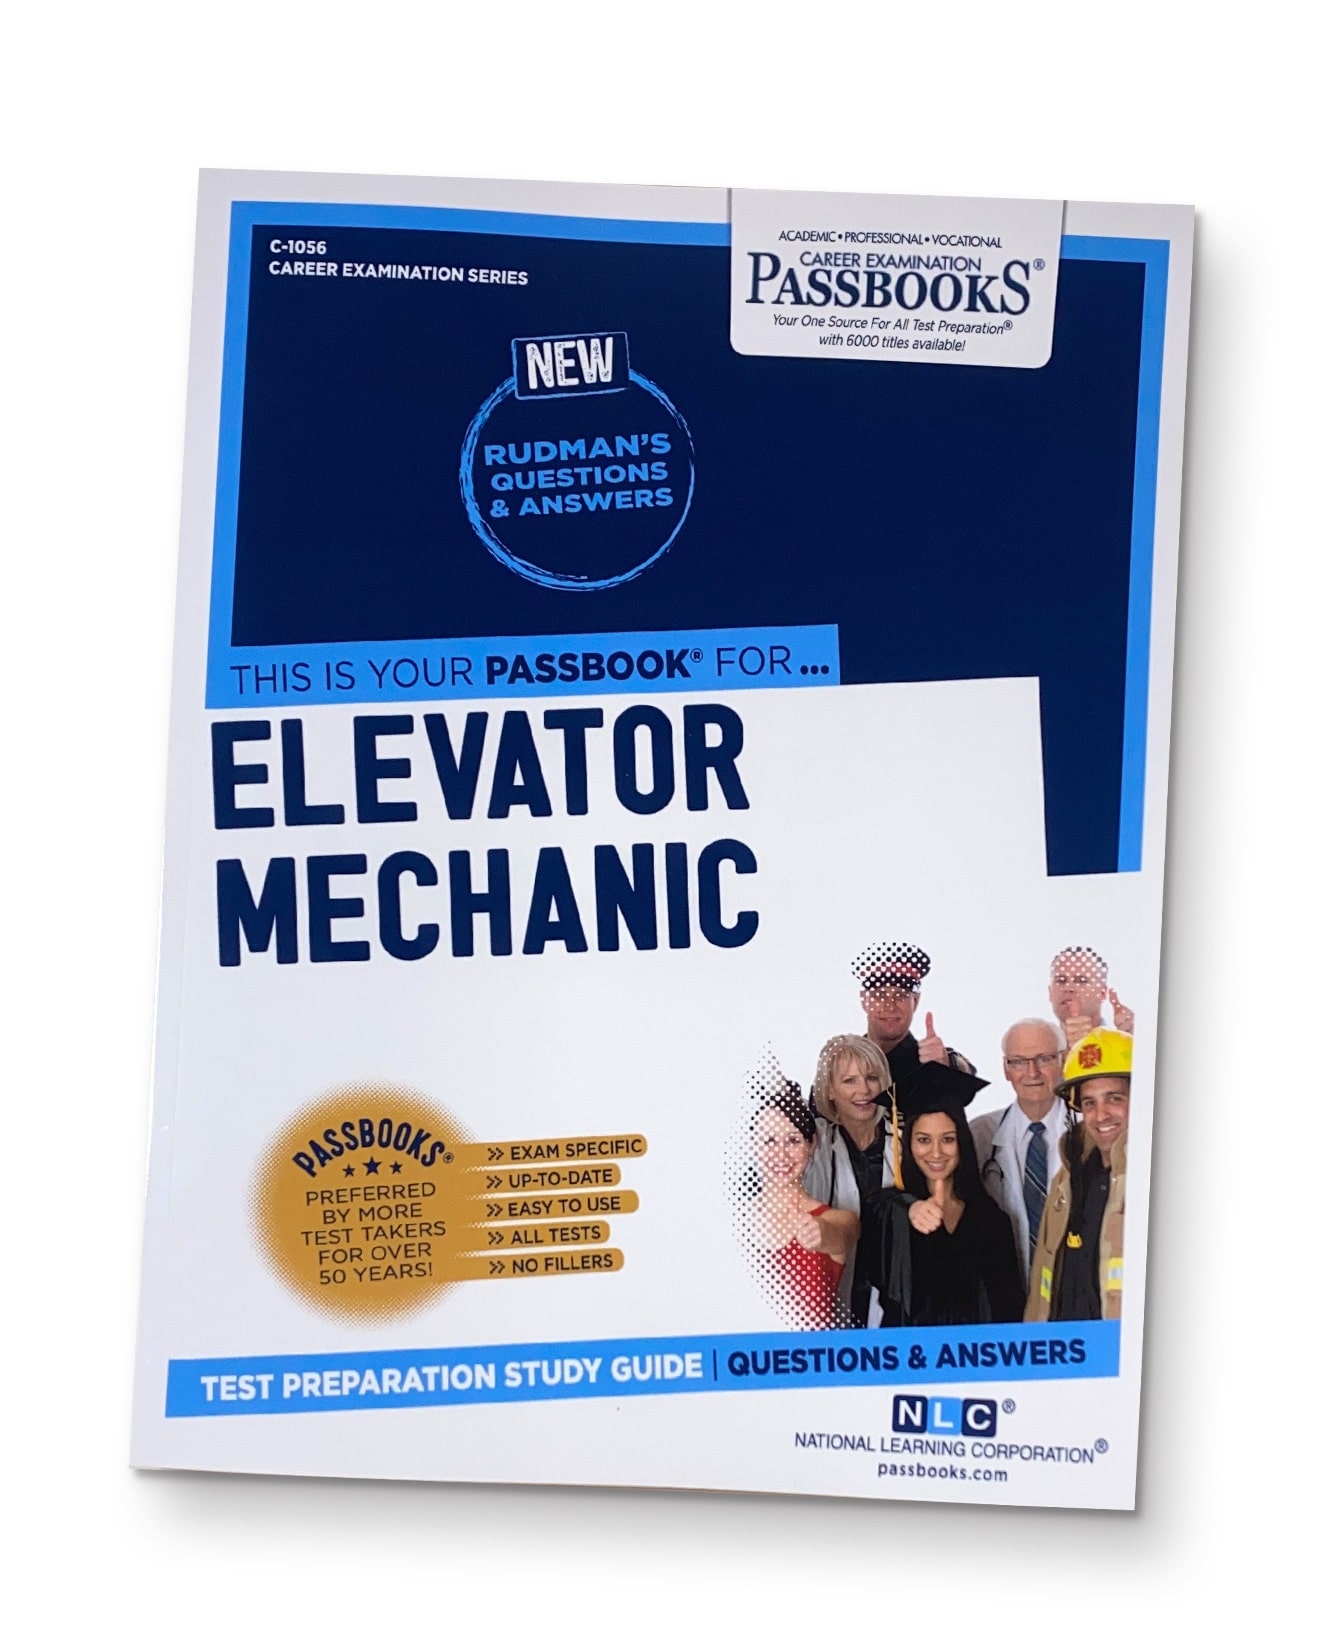 elevator-mechanic-passbook-elevator-books